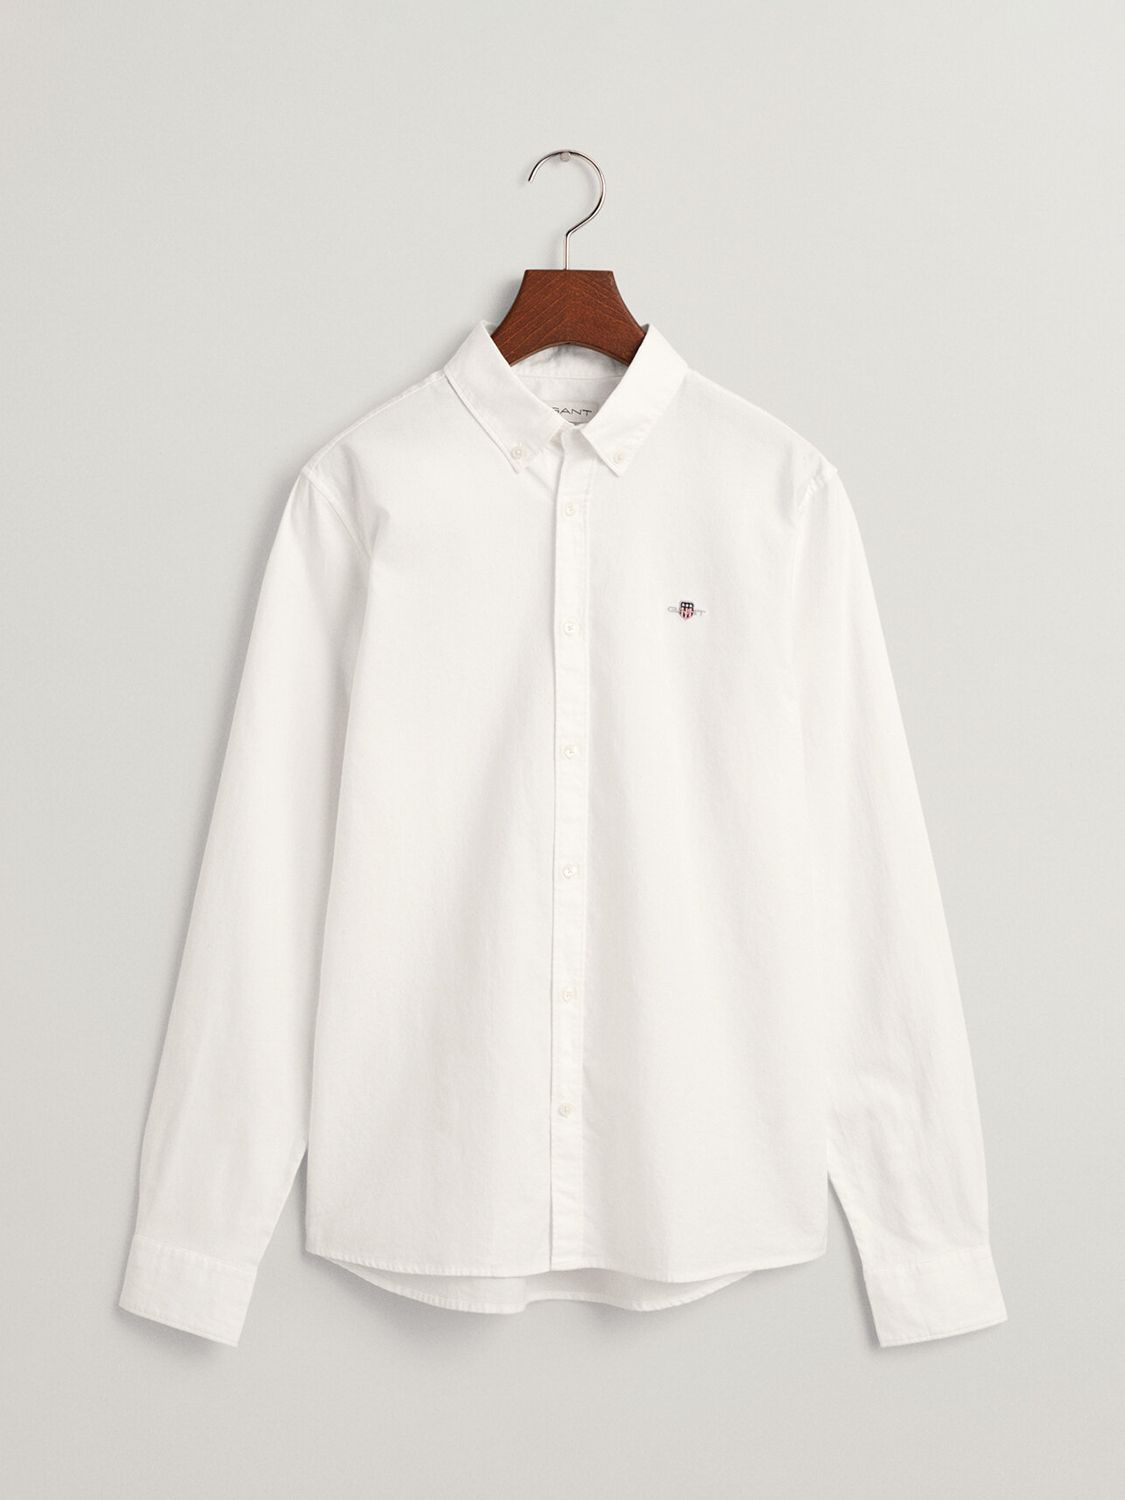 GANT Kids' Unisex Oxford Shirt, White at John Lewis & Partners